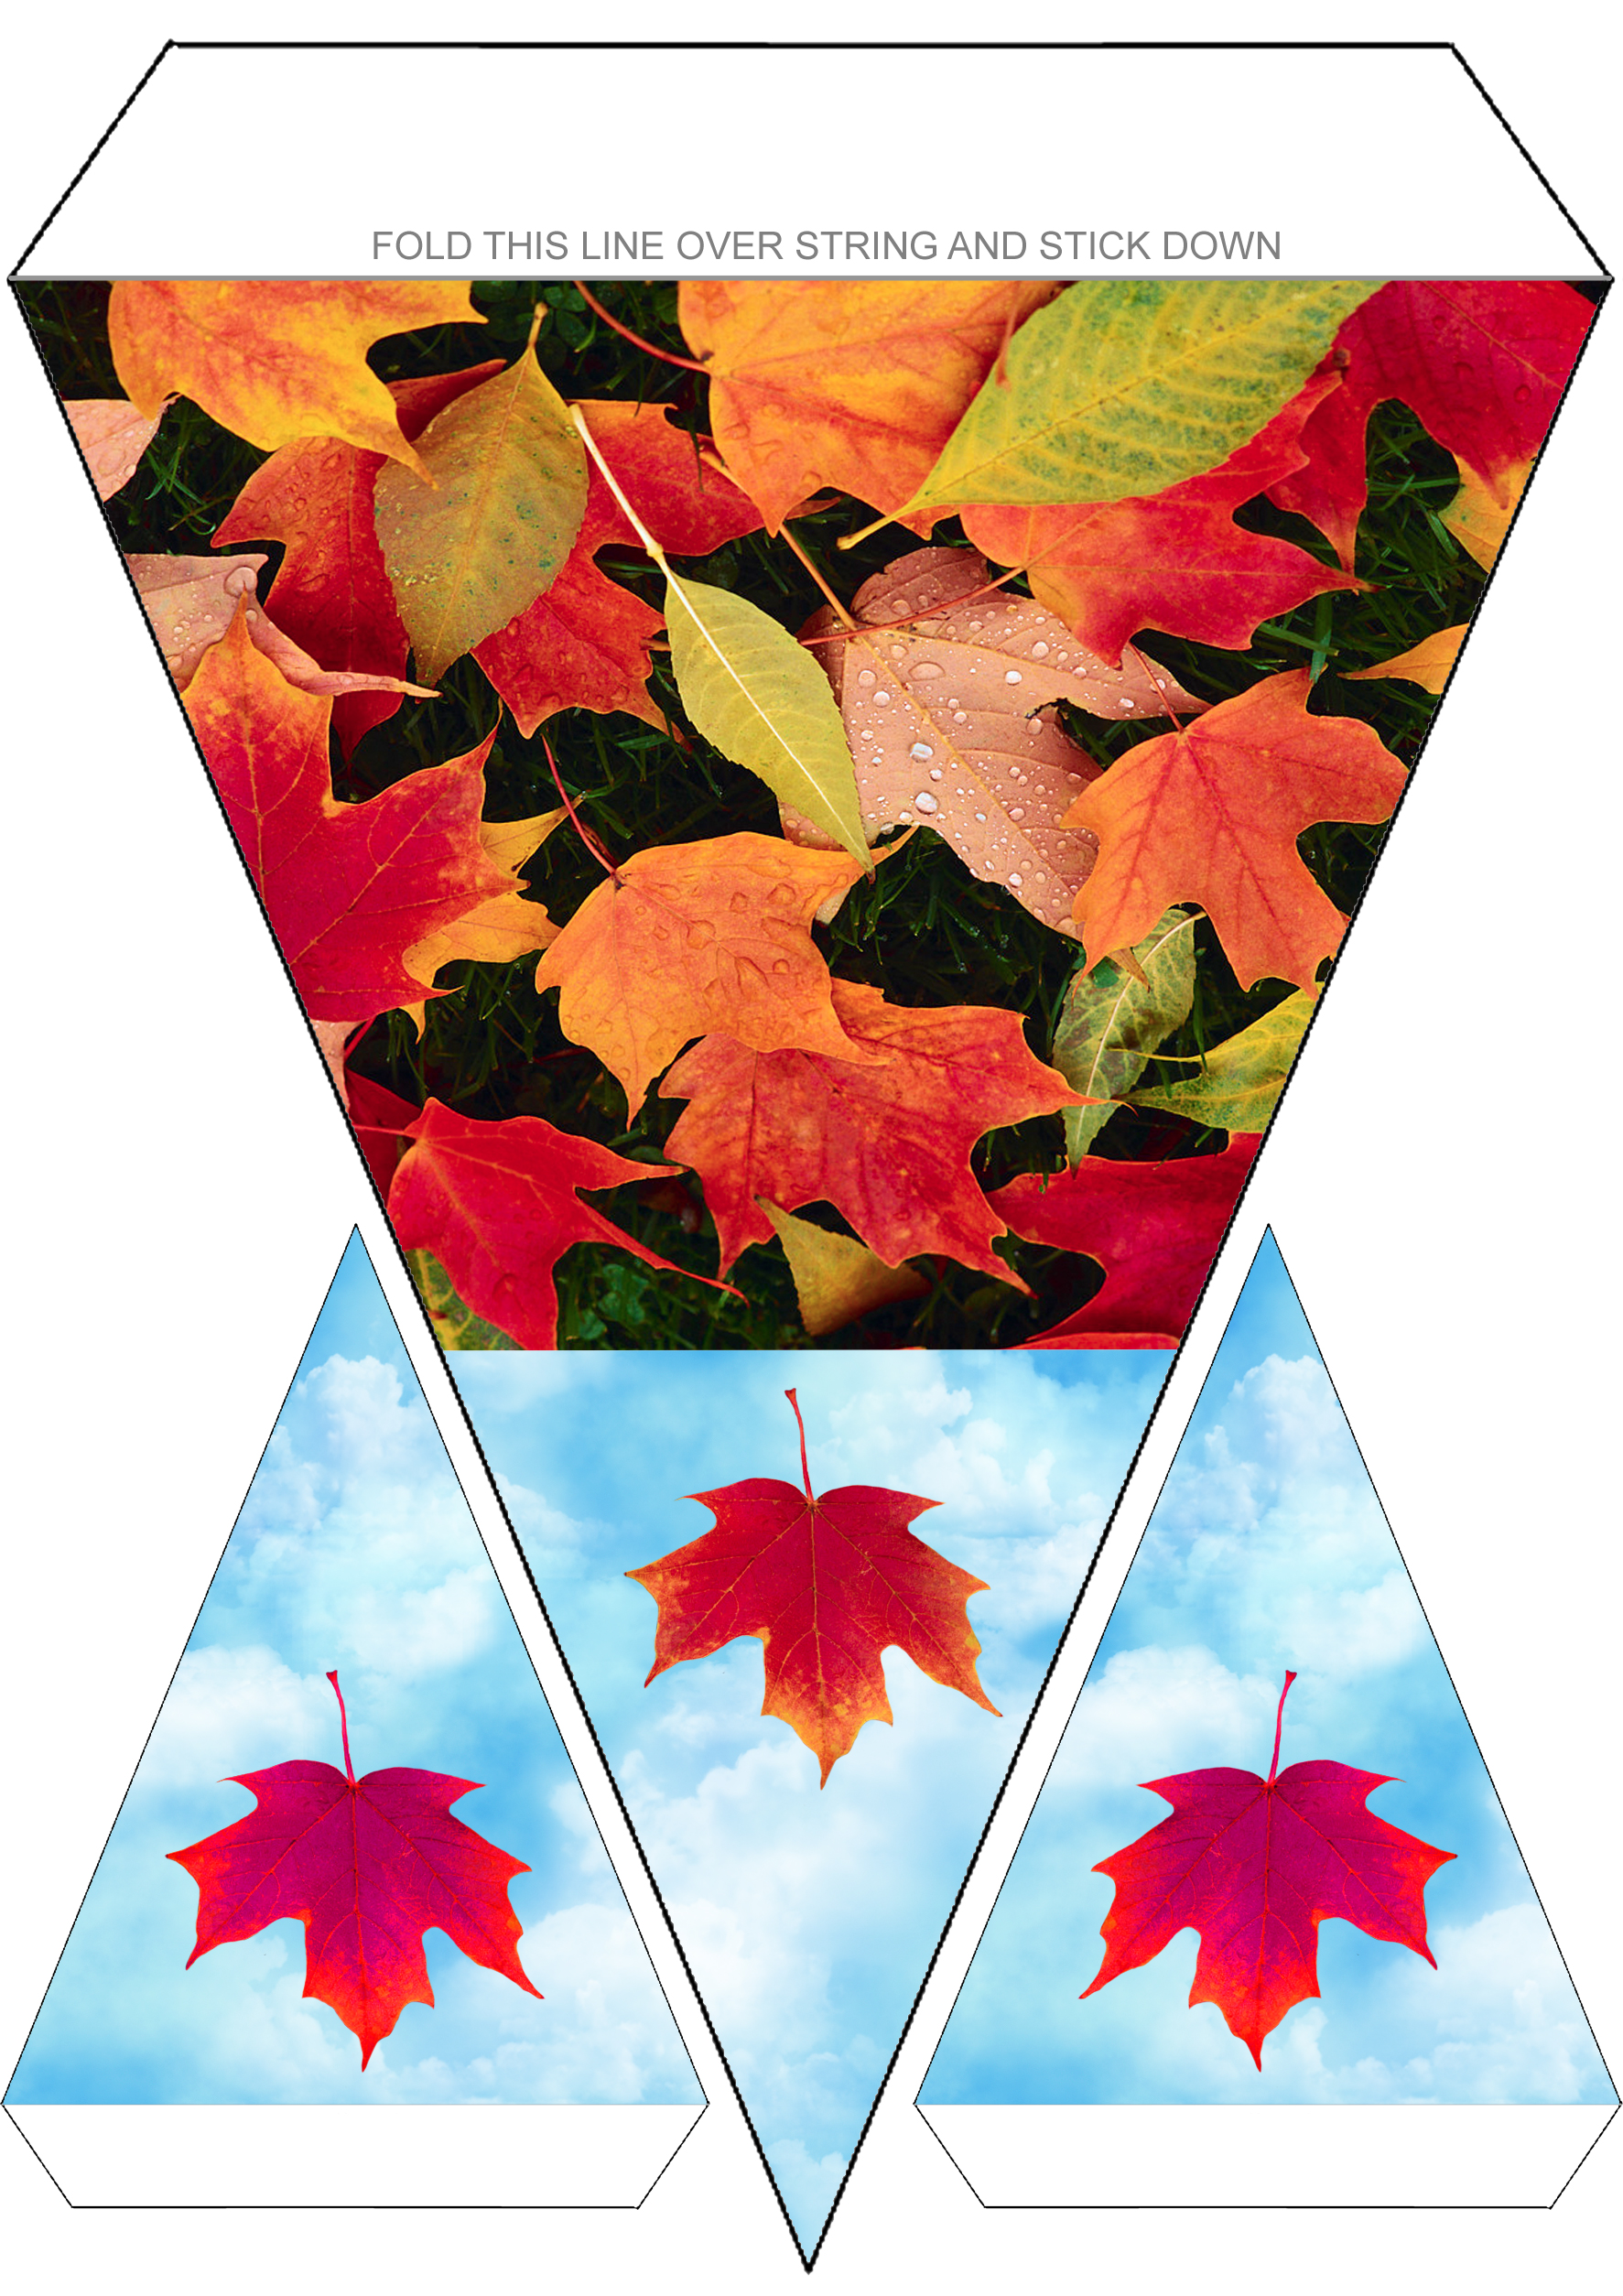 Printable bunting with an autun leaf theme